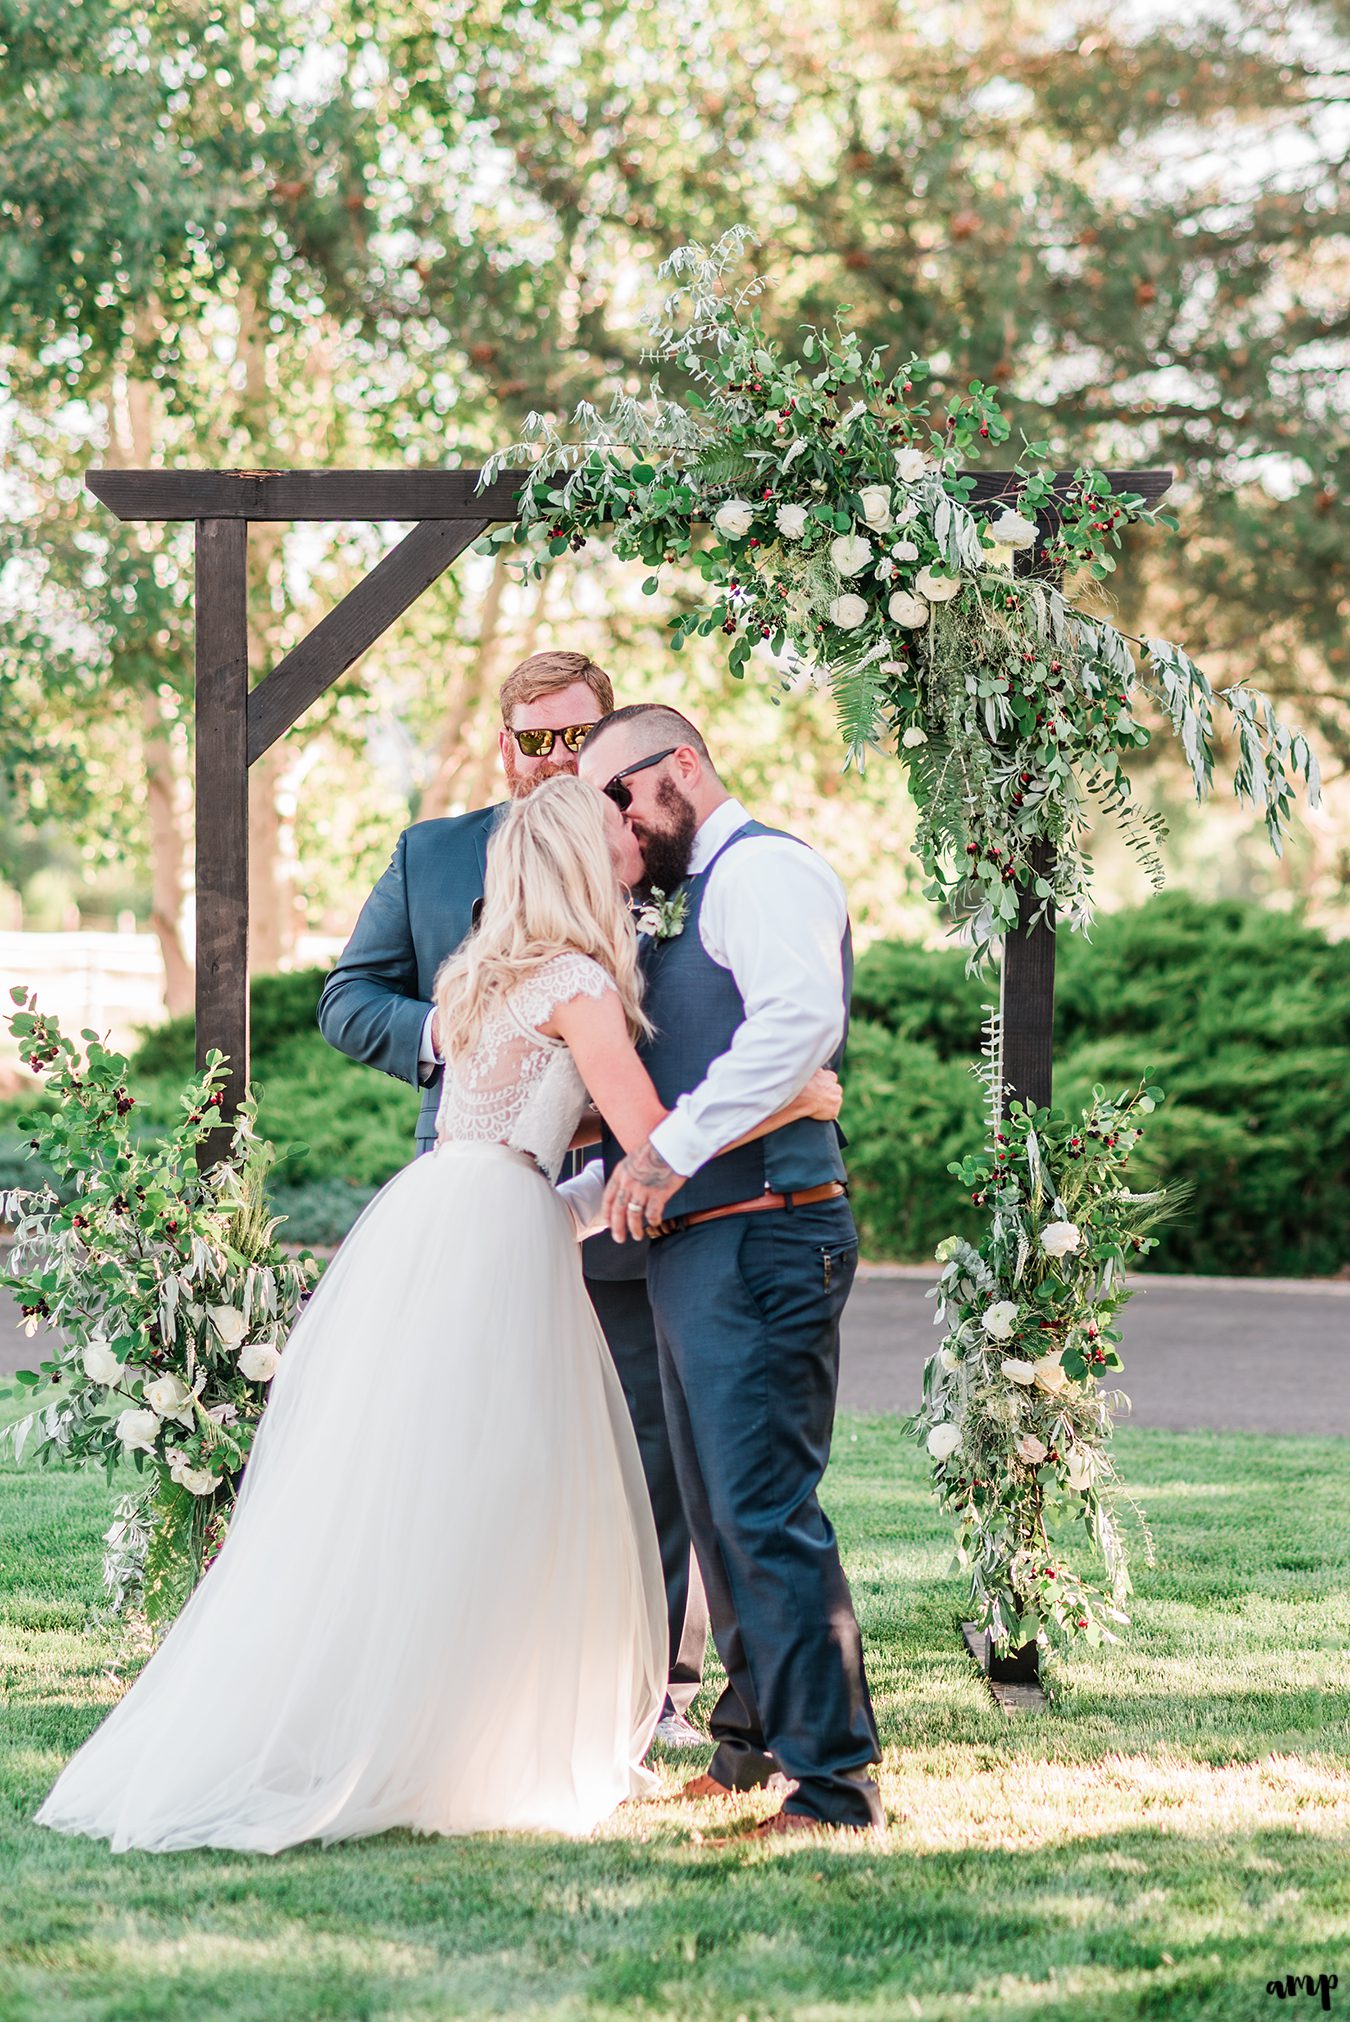 Beth and Dustin's first kiss | Grand Junction Backyard Wedding | amanda.matilda.photography